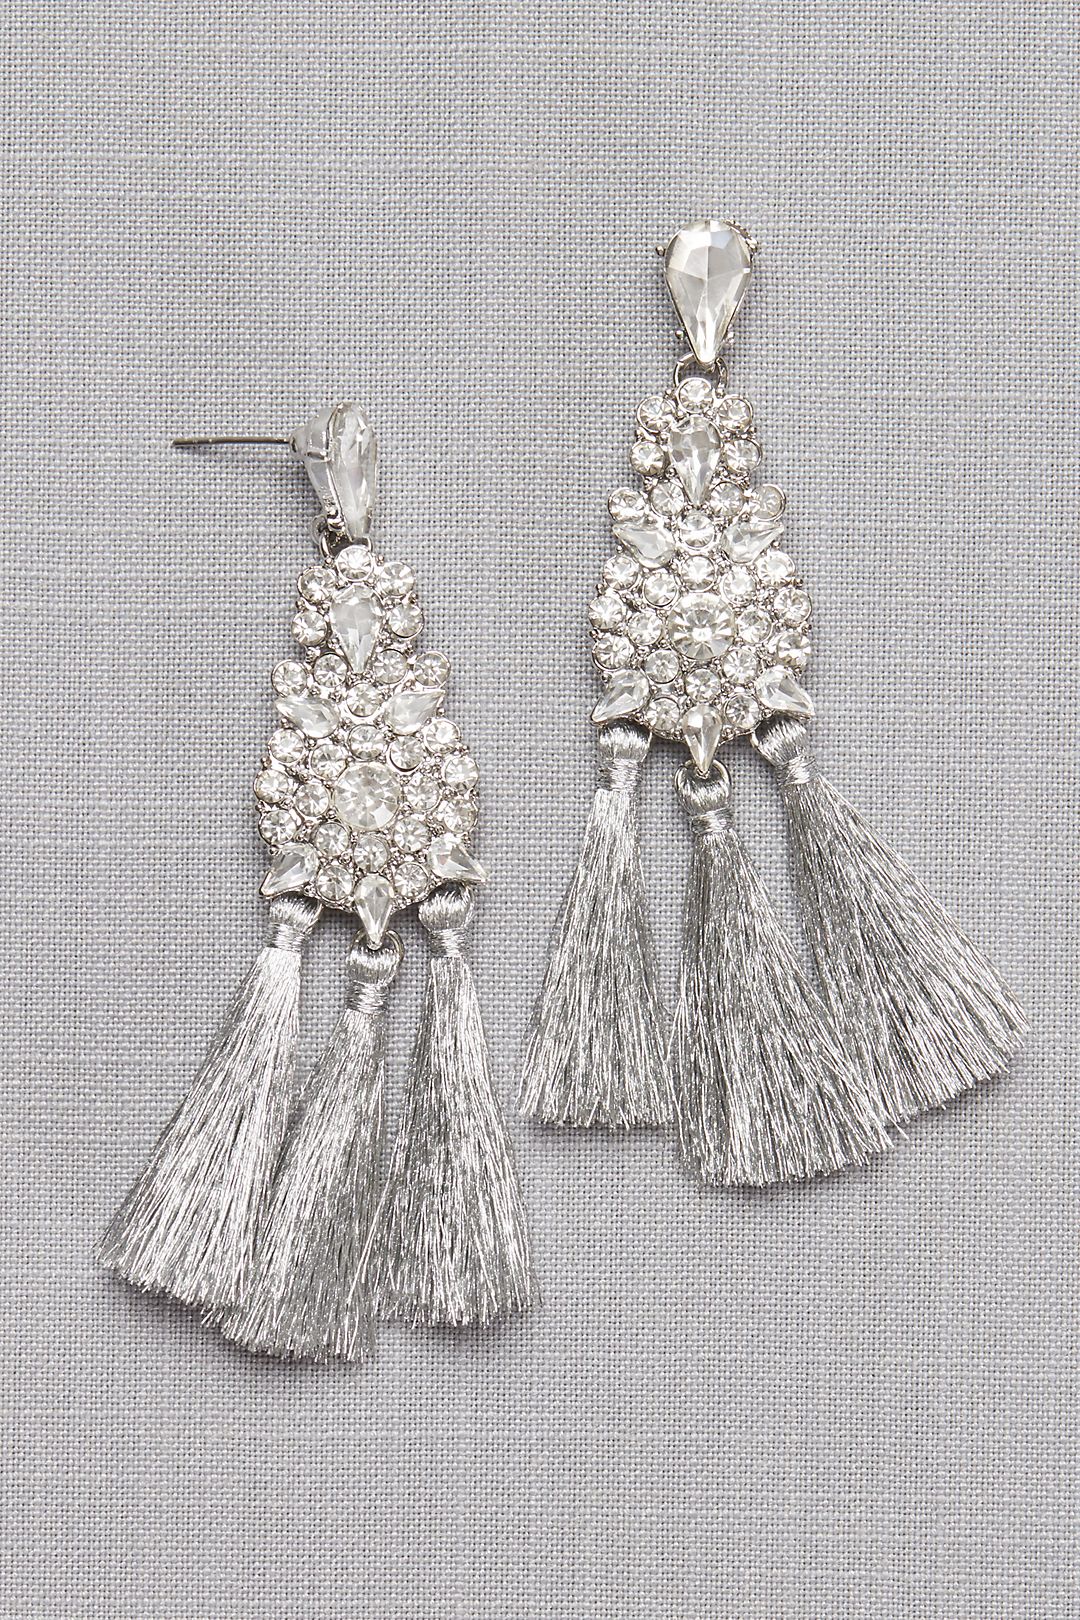 Thread Fringe Crystal Cluster Earrings Image 1